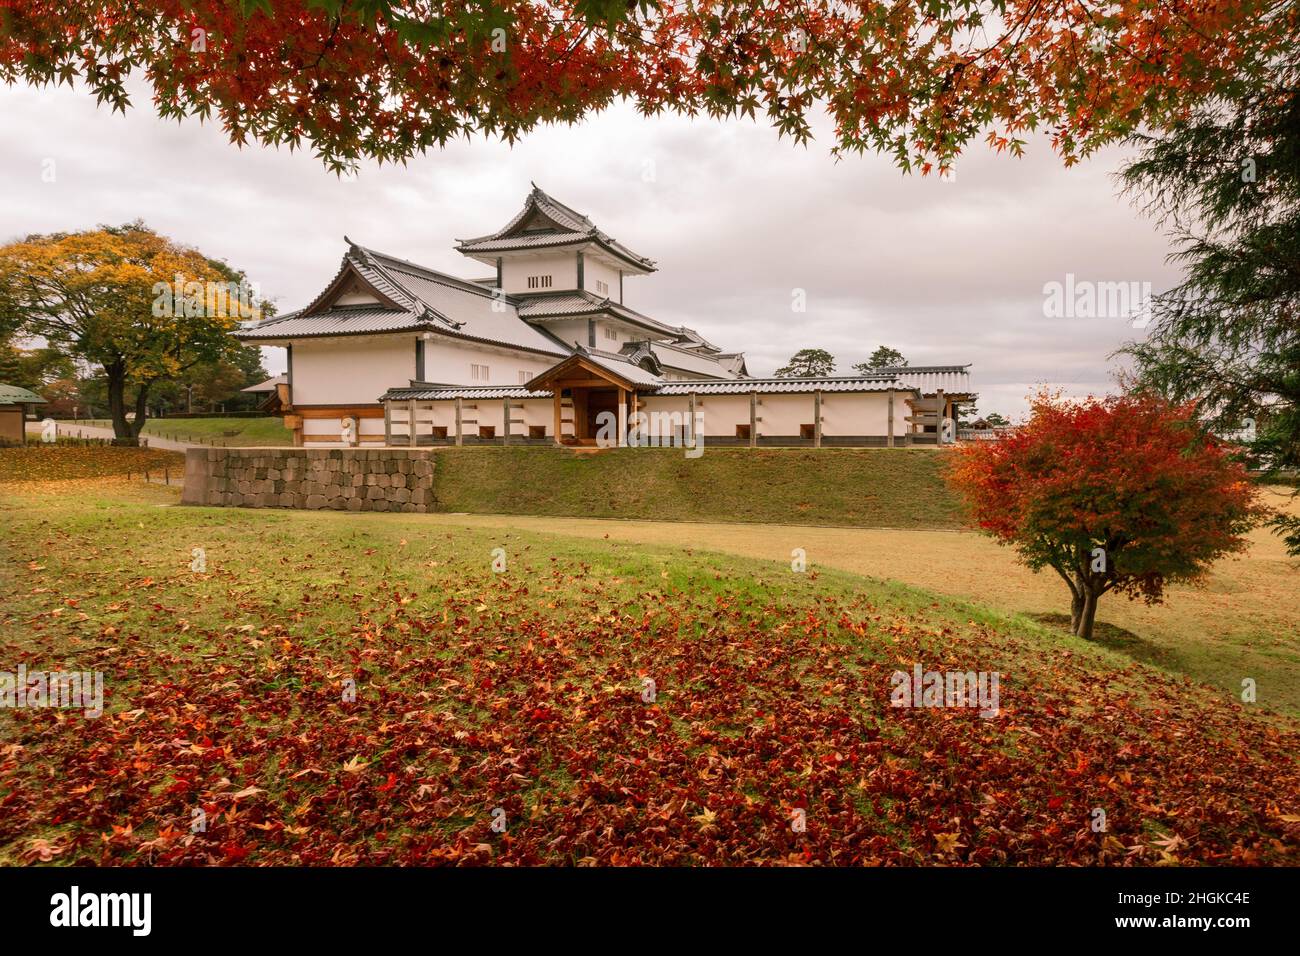 Autumn scenery of the Kanazawa castle park in Kanazawa, Japan Stock Photo